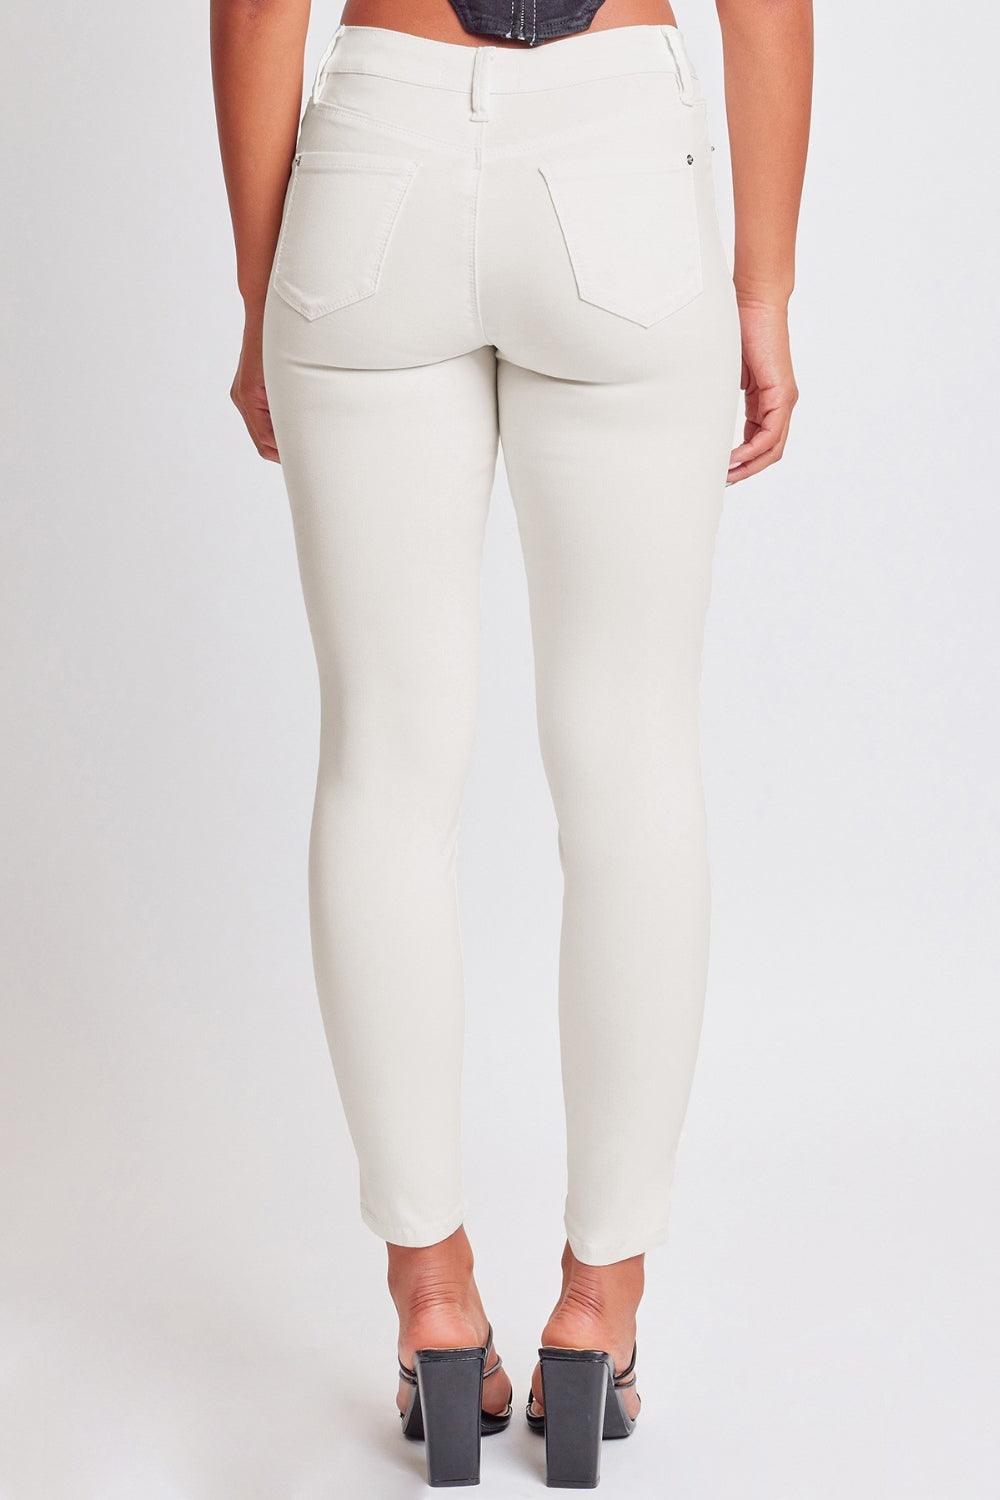 YMI Jeanswear Hyperstretch Mid Rise Skinny Jeans - Jessiz Boutique